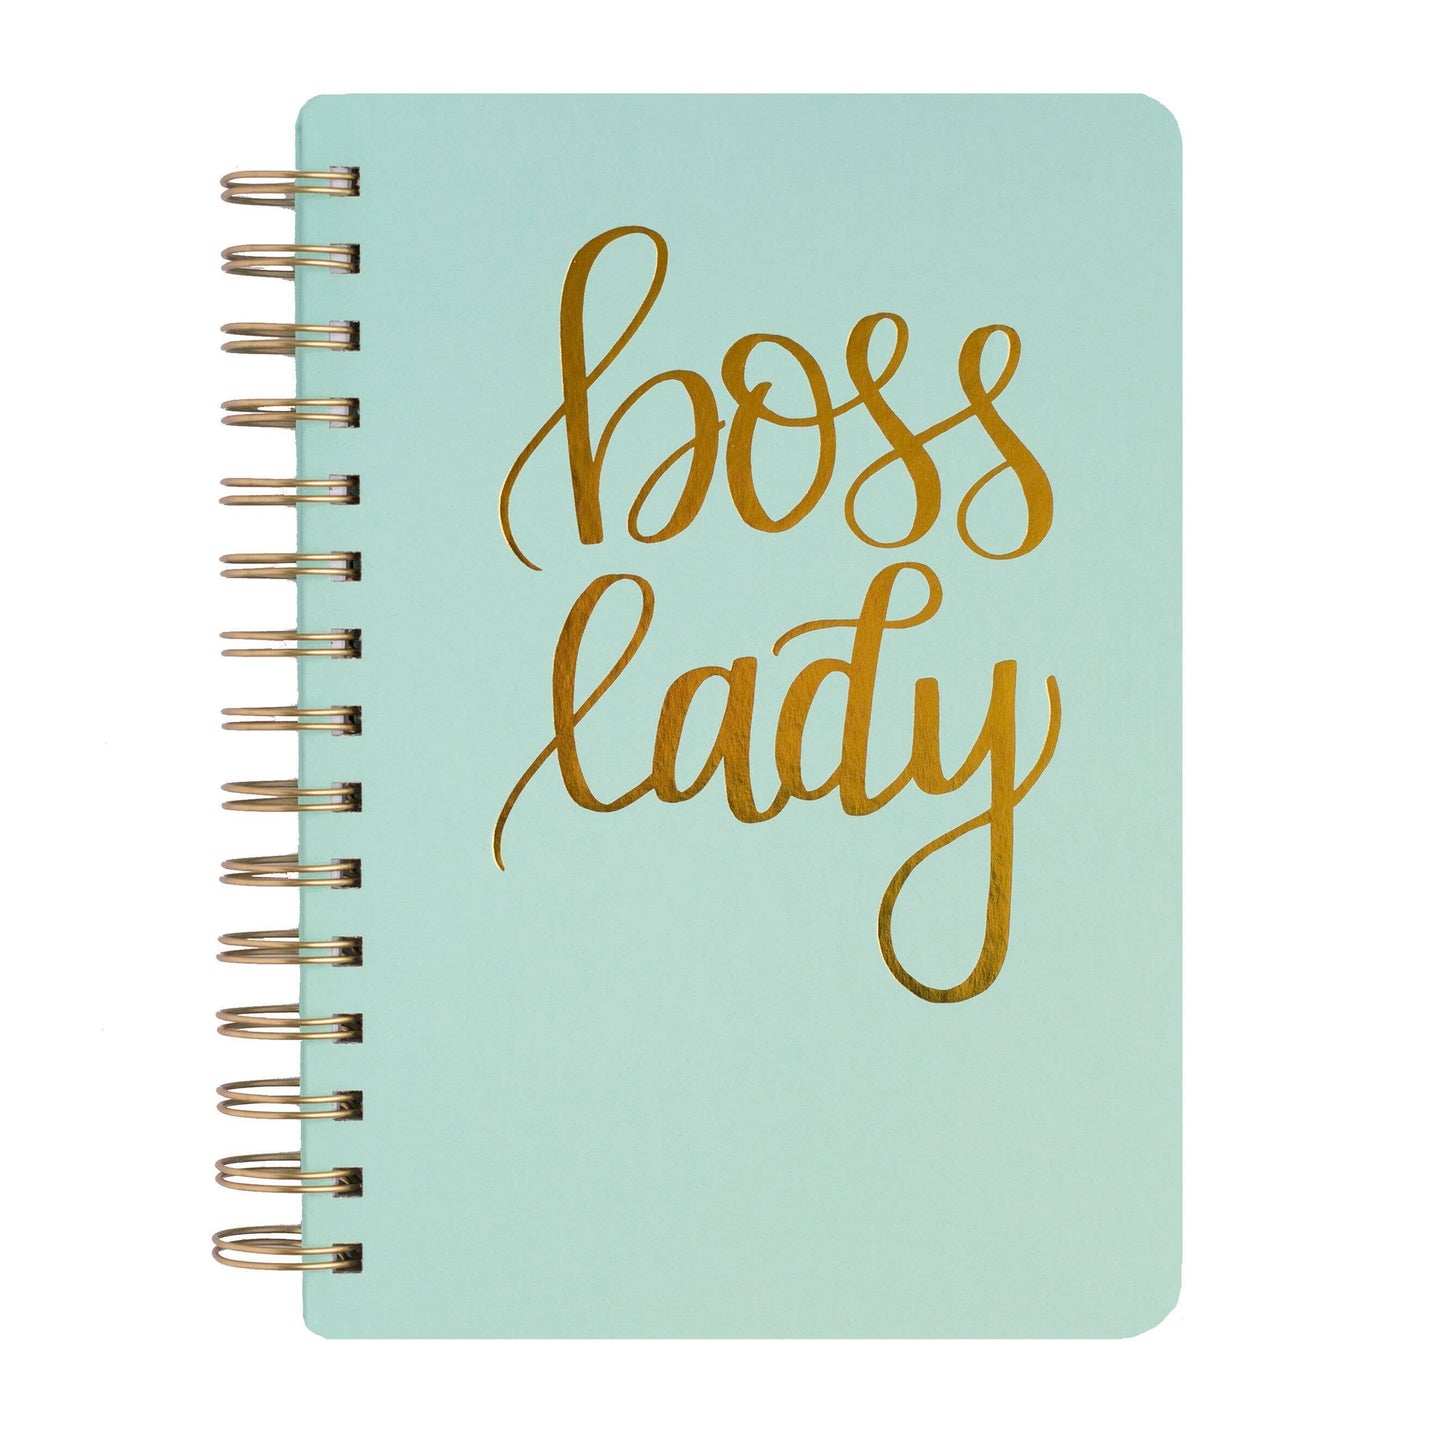 Boss Lady Spiral Notebook